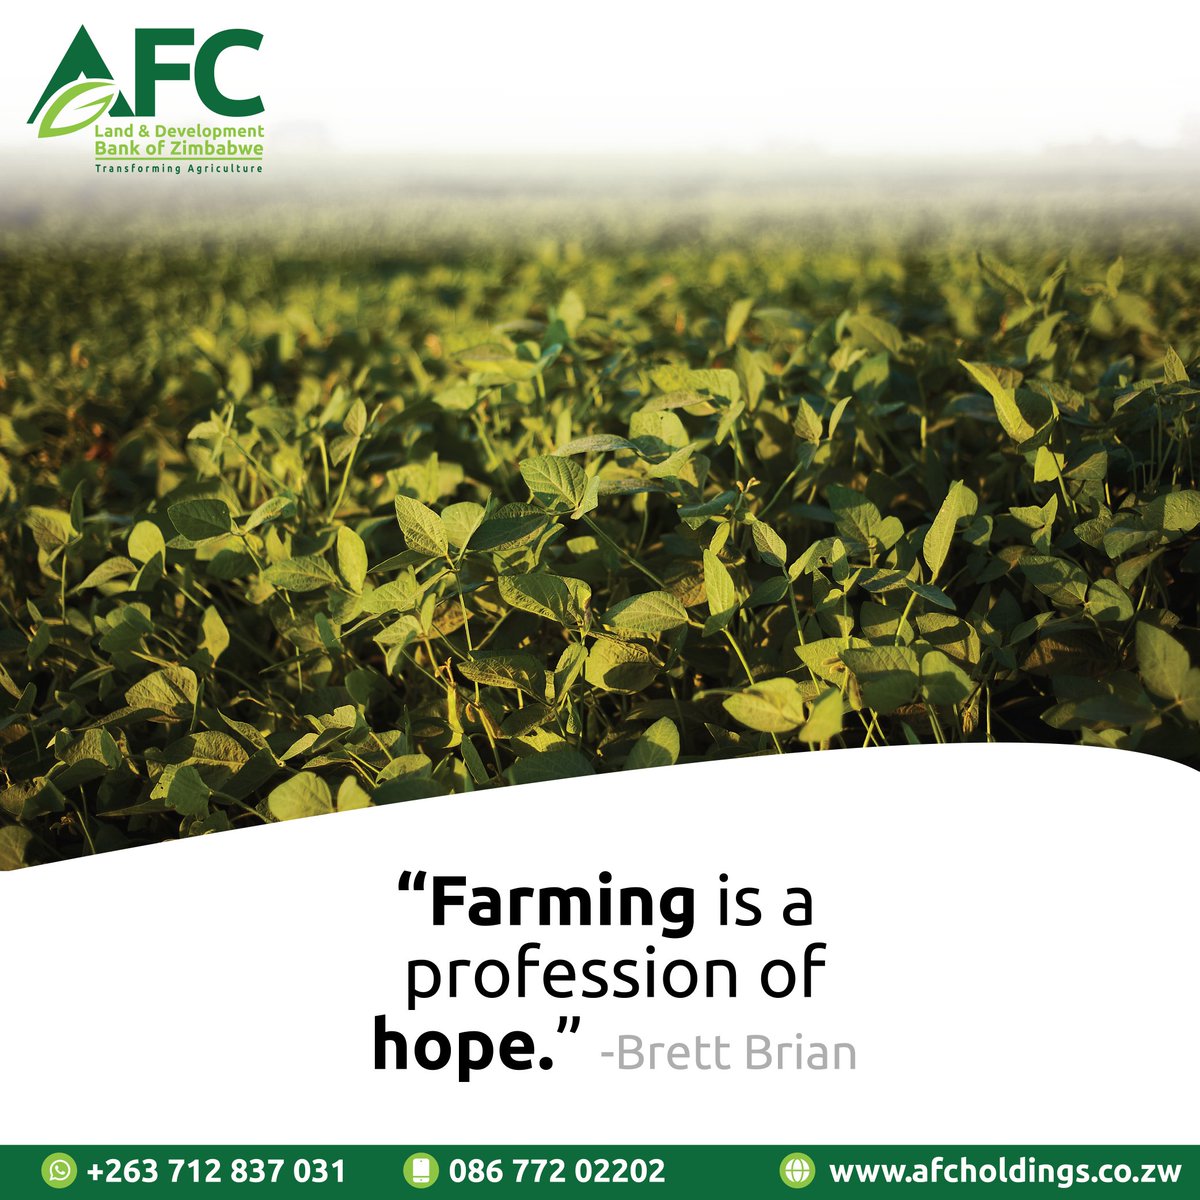 #TransformingAgriculture Through AFC Land  & Development Bank